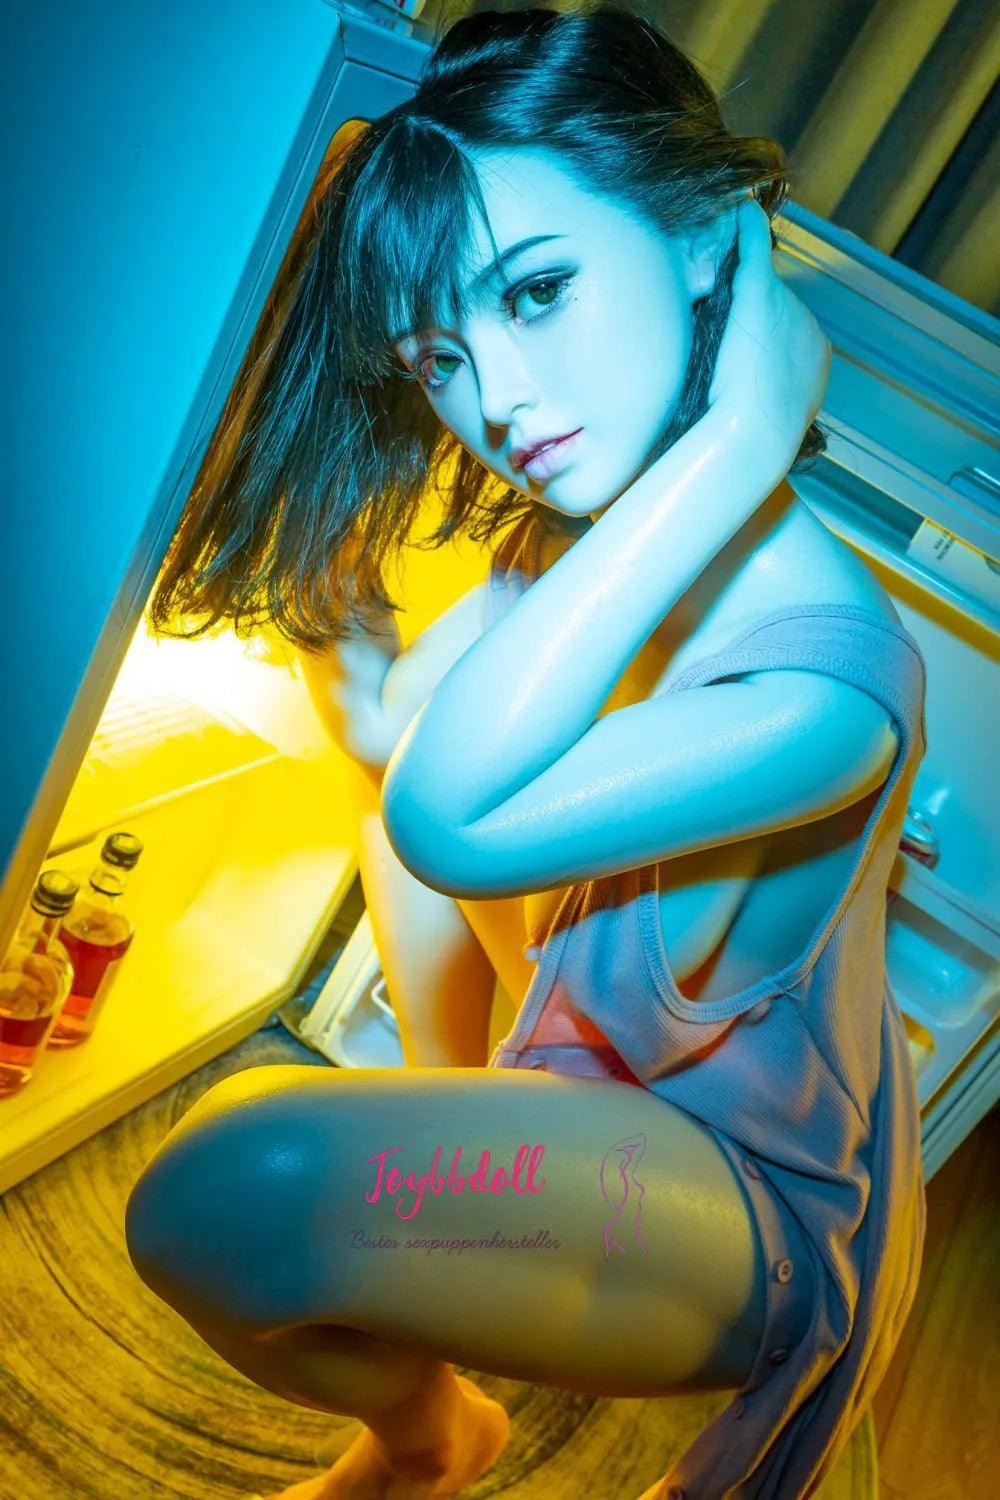 Little Apple-Japanische Cosplay Influencerin(19 Jahre) - Joybbdoll-CST Doll